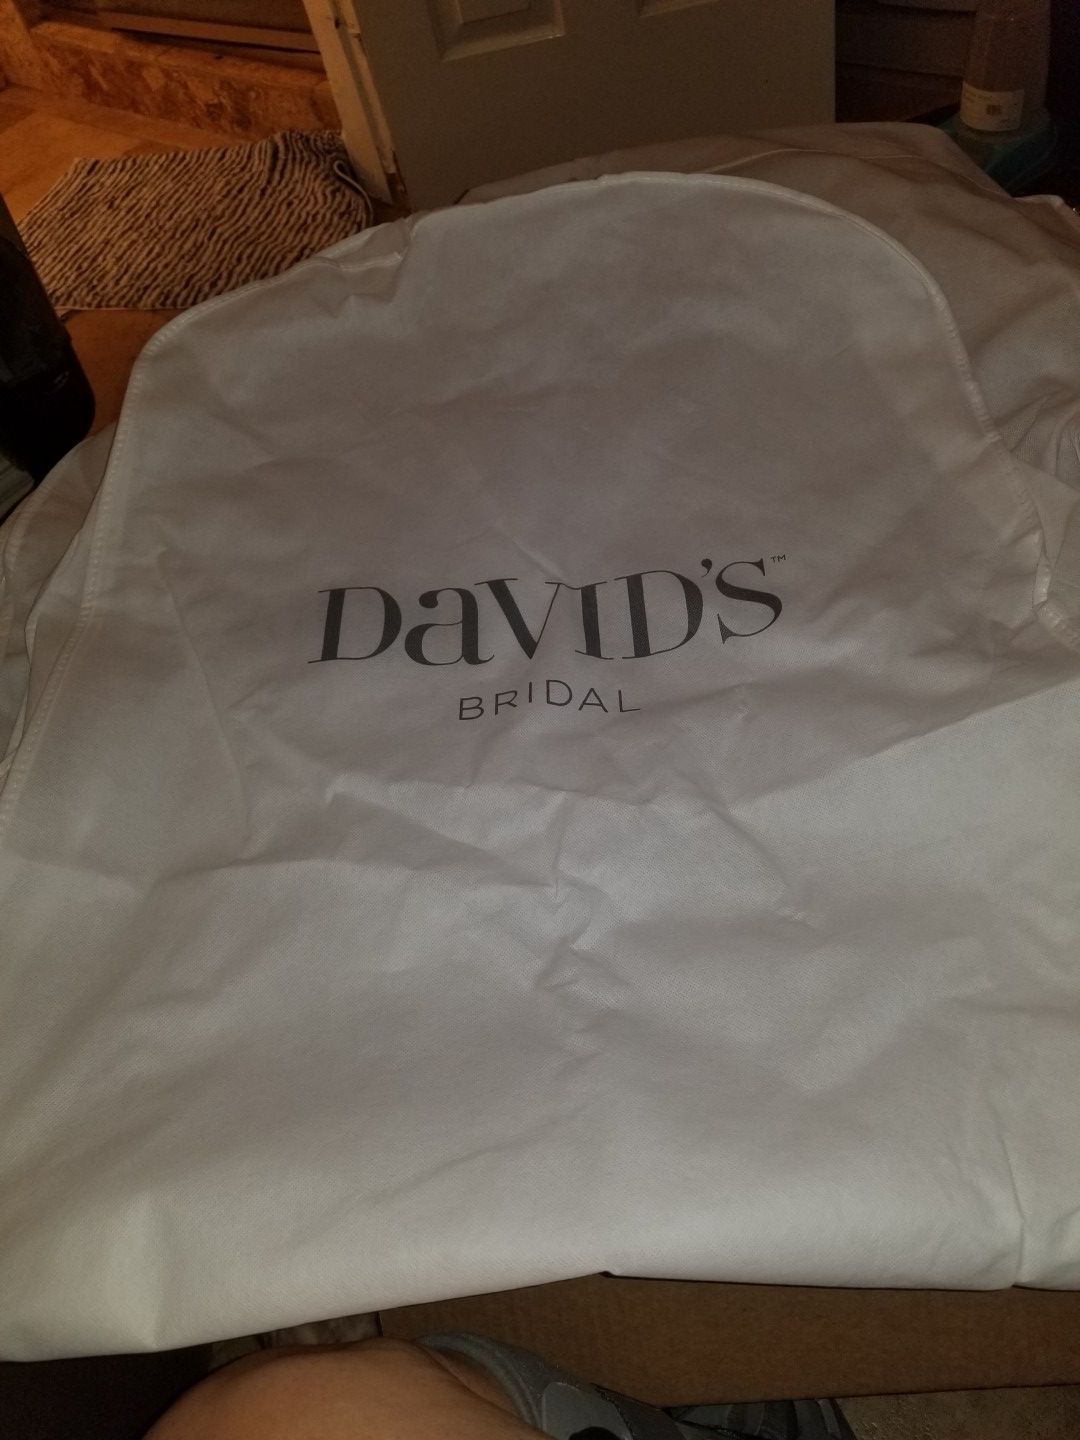 Davids bridal wedding gown bag